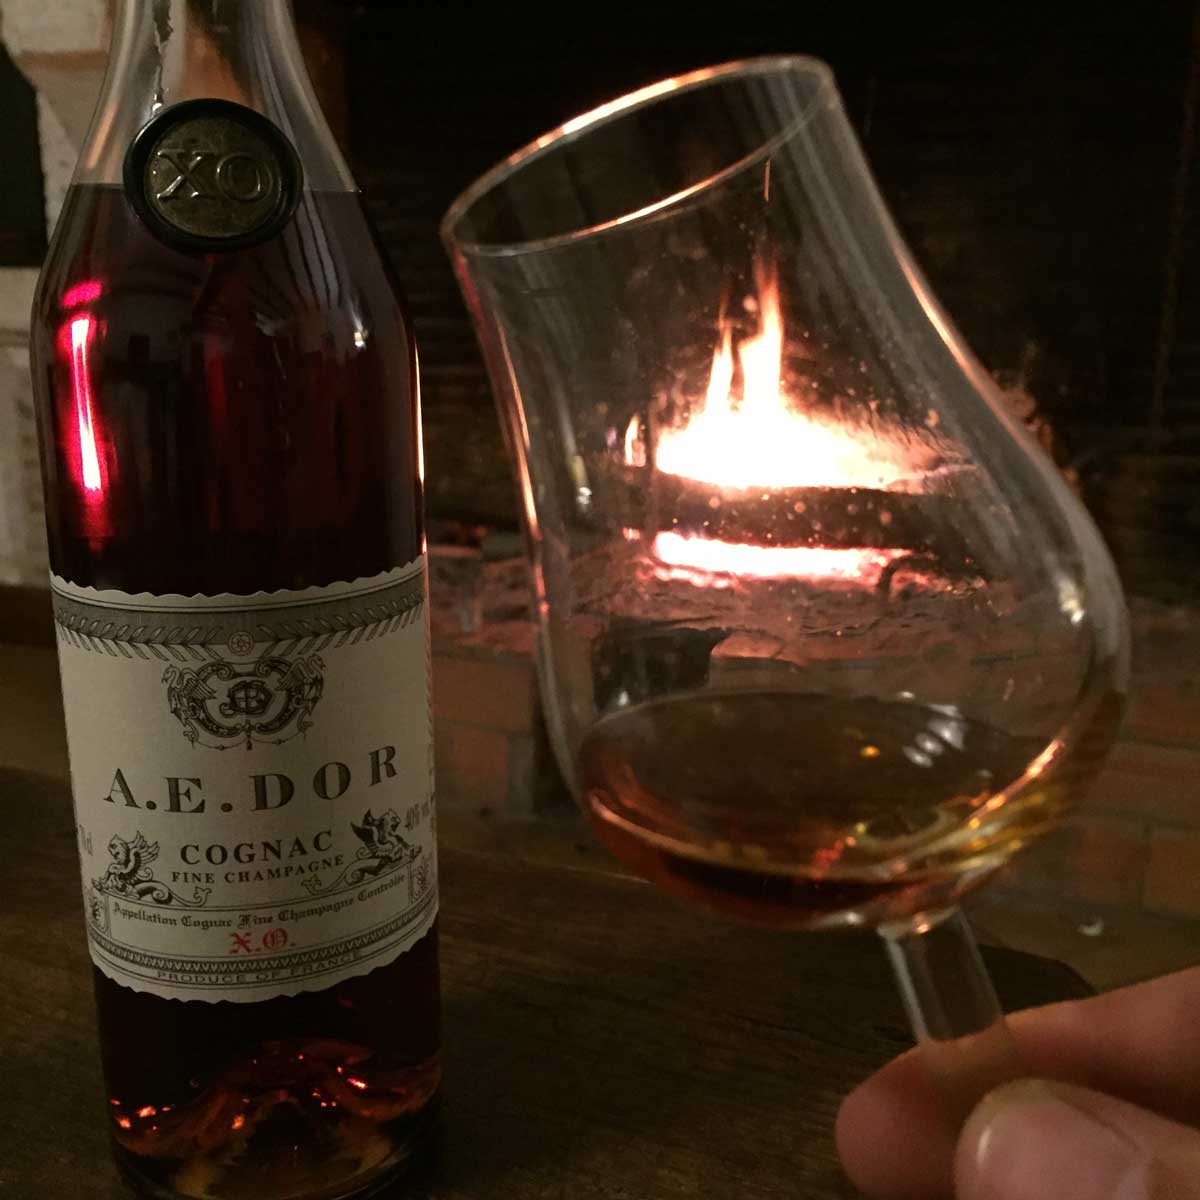 A.E. Dor Cognac: History Built on Passion and Quality